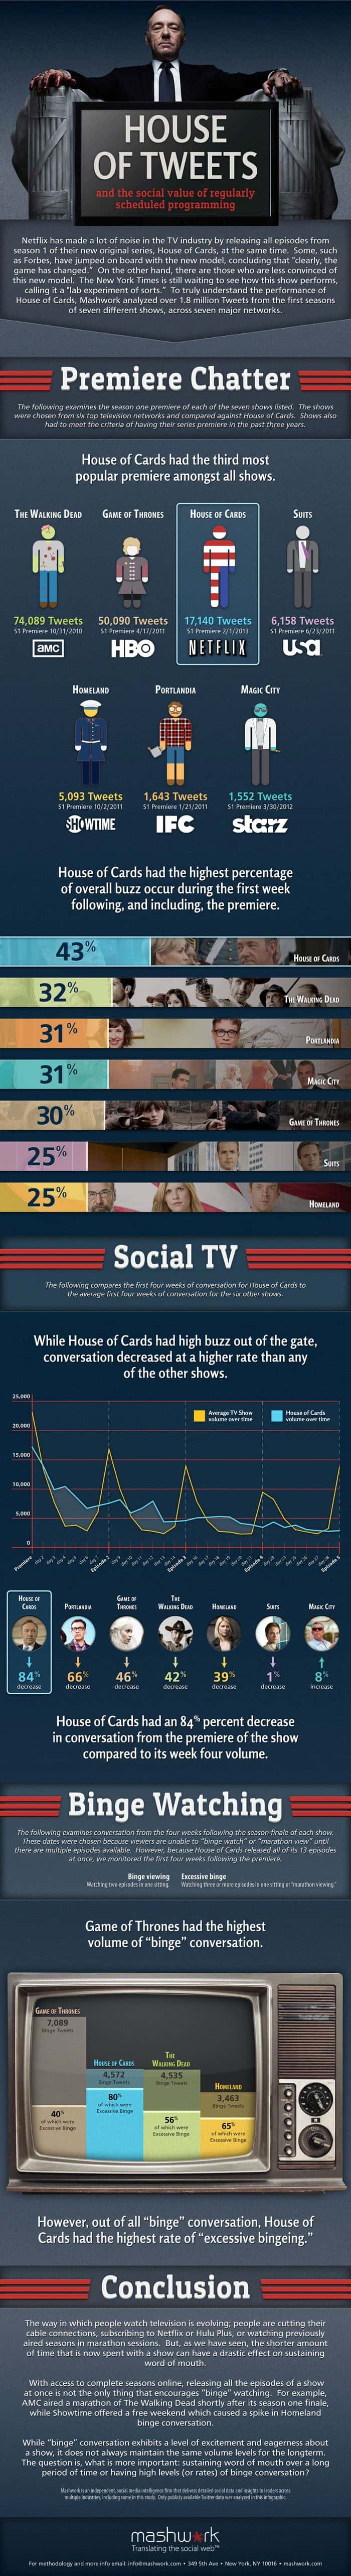 Netflix House of Tweets Infographic